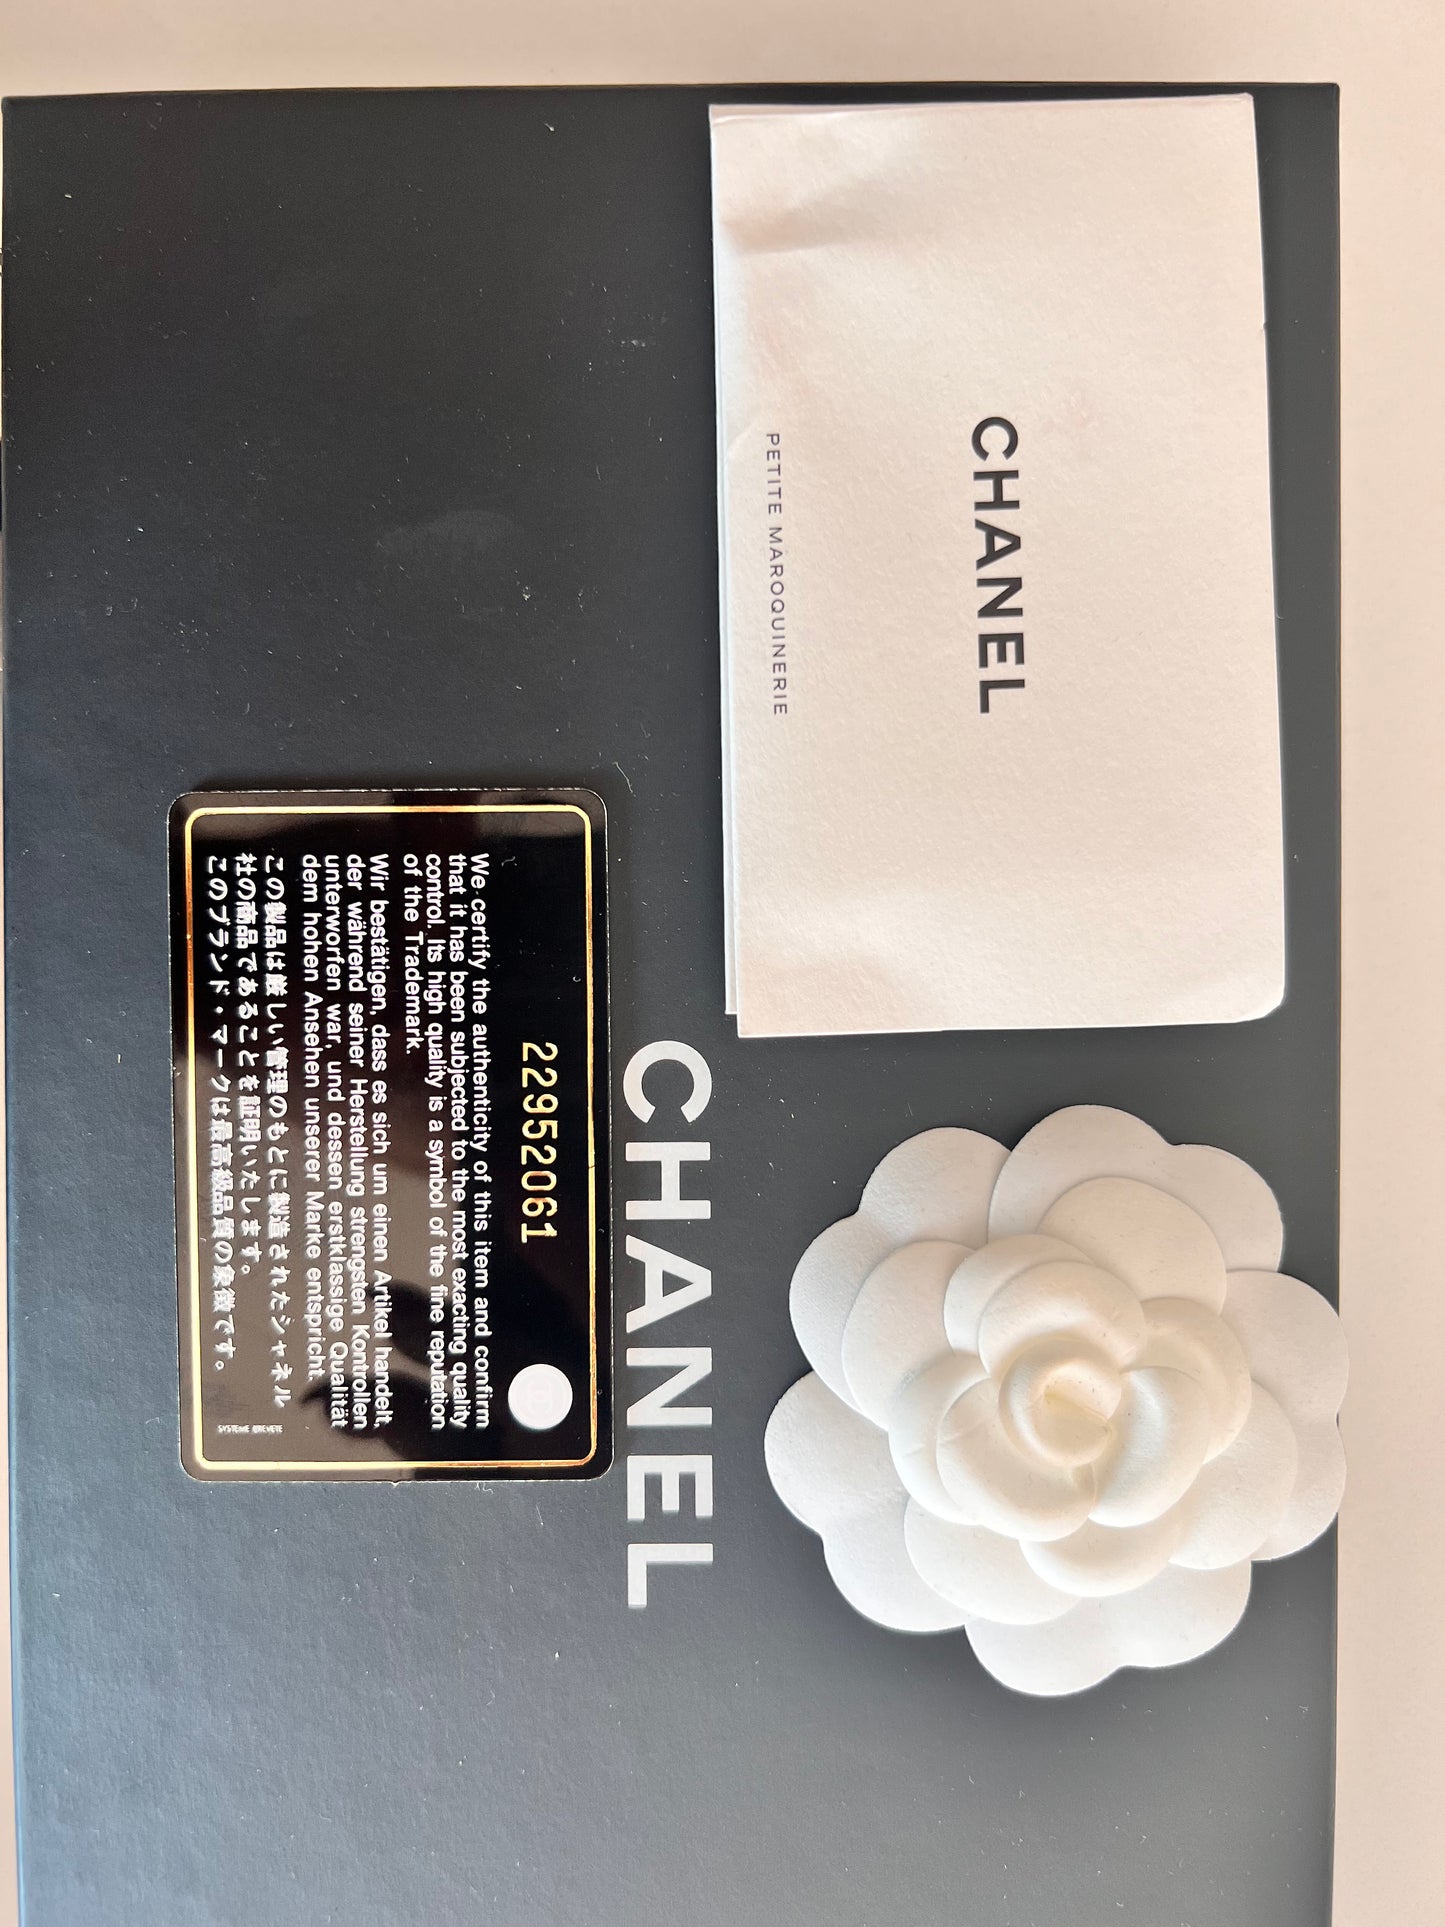 Chanel Black Lambskin Long Zip Around Wallet